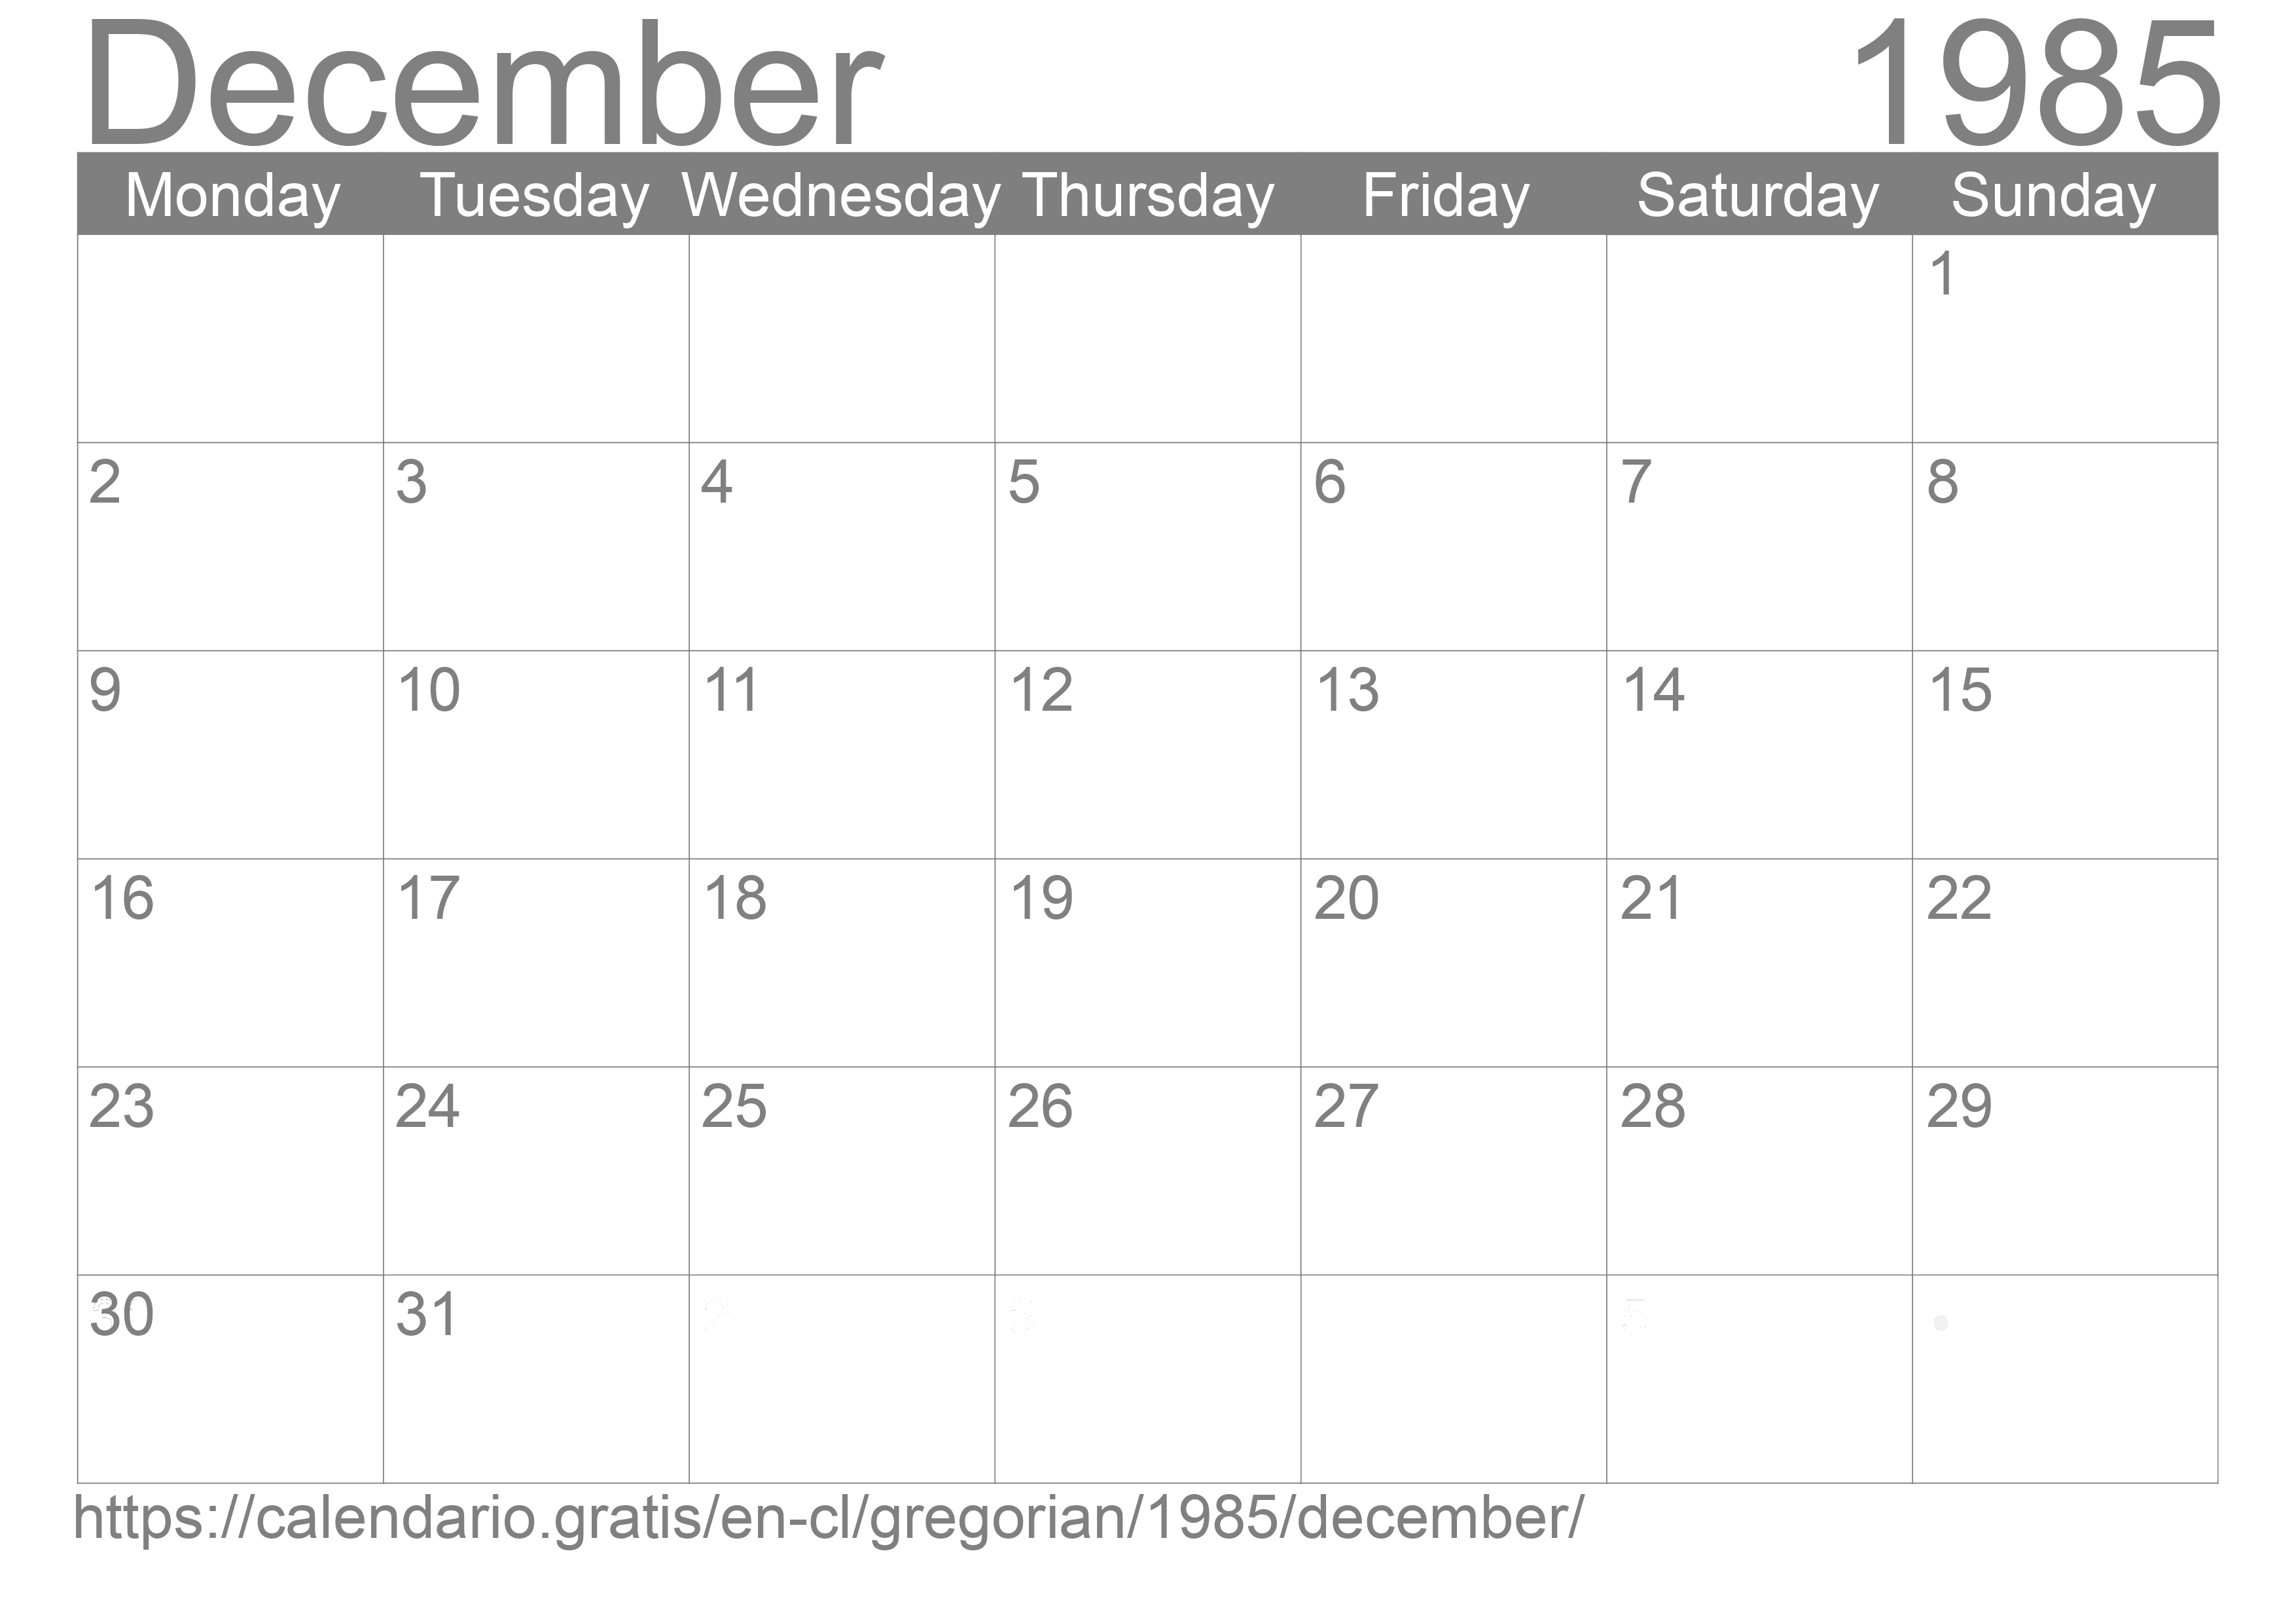 Calendar December 1985 to print